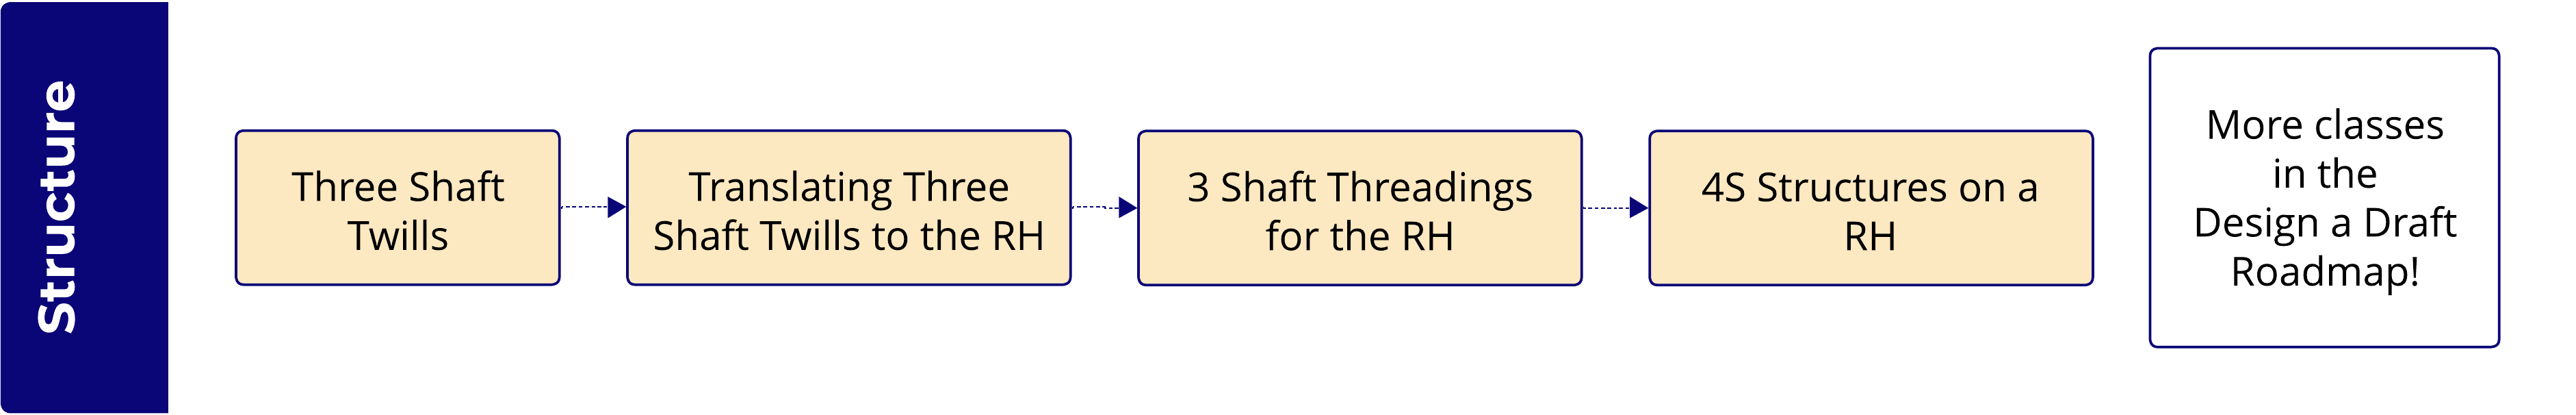 rigid heddle roadmap structure